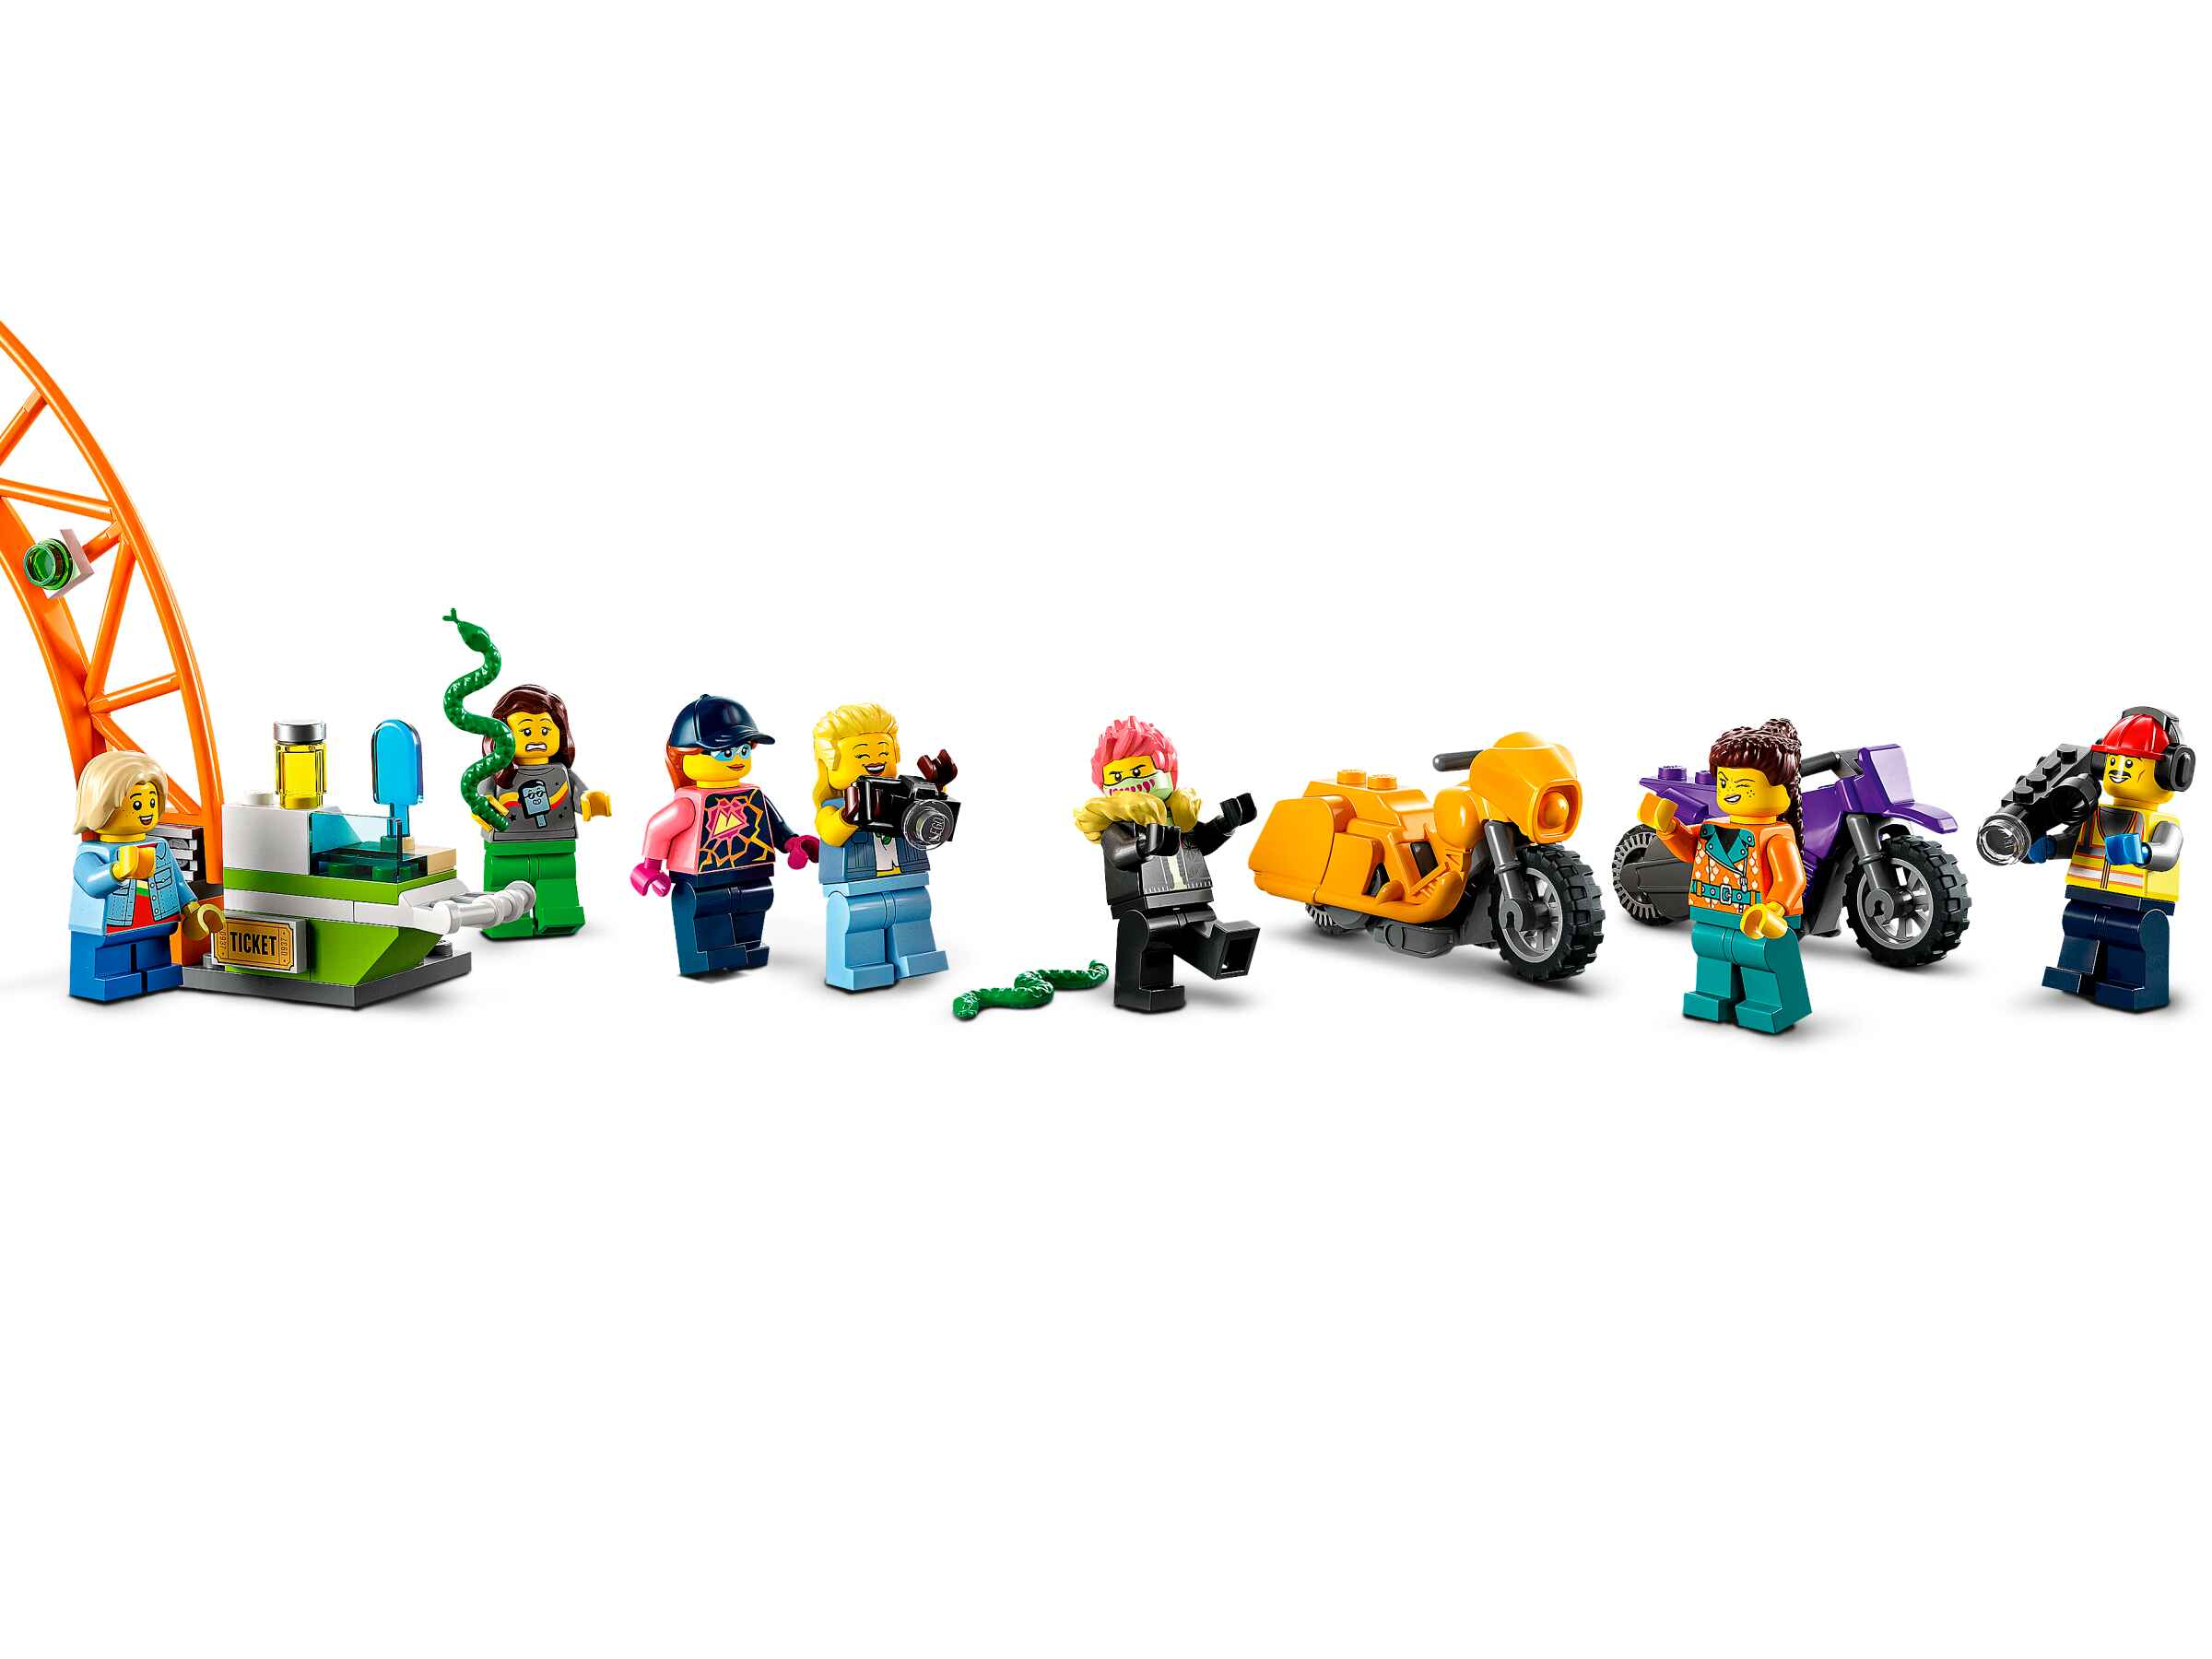 LEGO 60339 City Stuntz Stuntshow-Doppellooping, Monstertruck, 7 Minifiguren